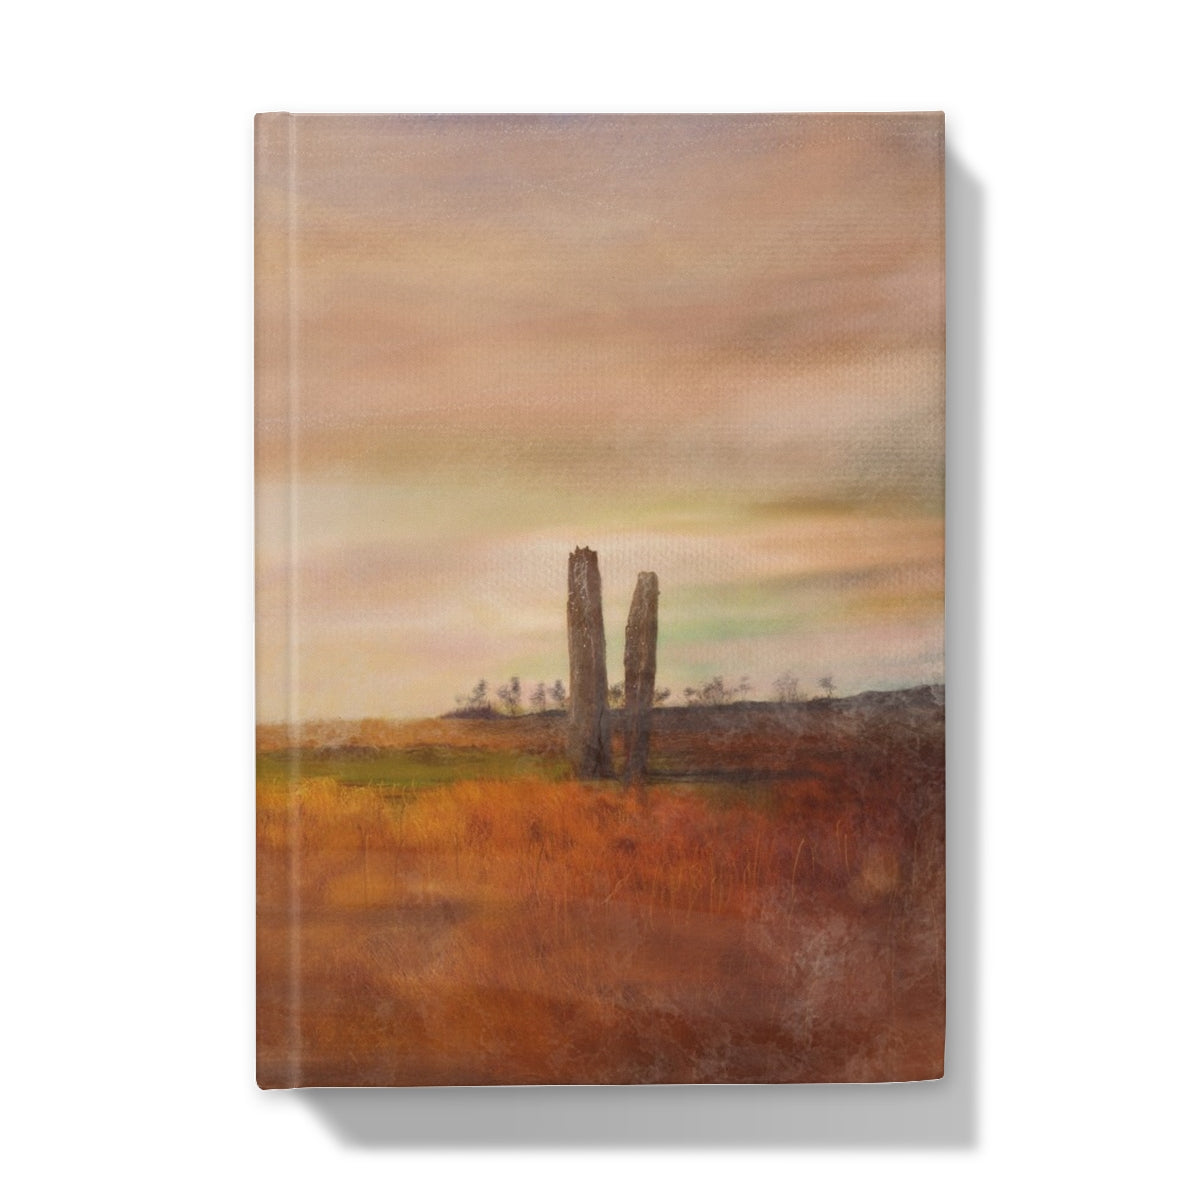 Machrie Moor Arran Art Gifts Hardback Journal-Journals & Notebooks-Arran Art Gallery-A4-Plain-Paintings, Prints, Homeware, Art Gifts From Scotland By Scottish Artist Kevin Hunter